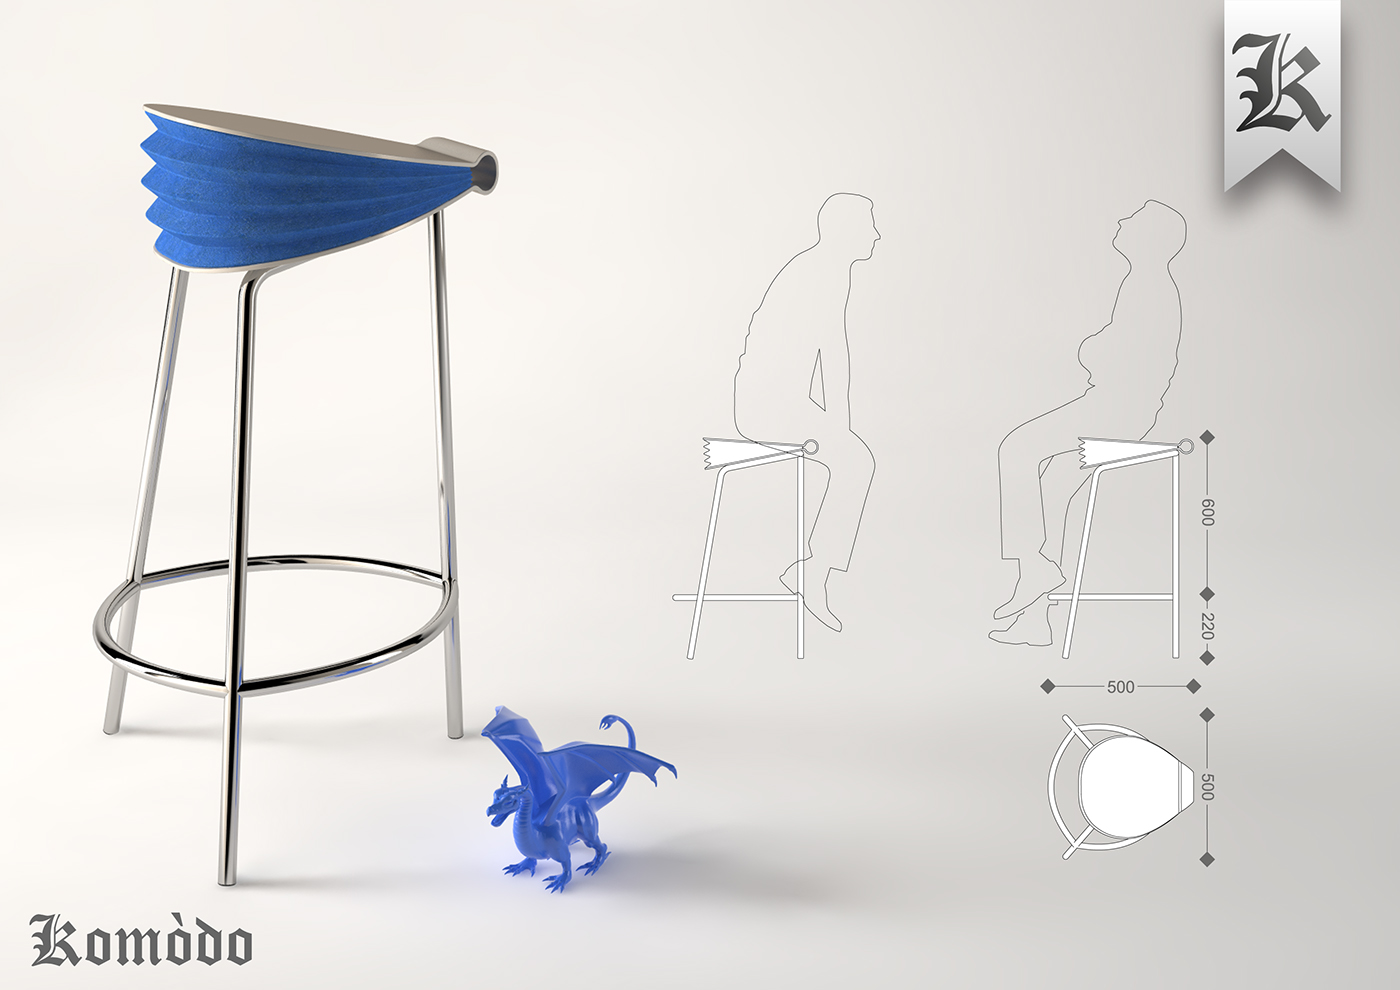 design stool Interior manrico freda product 3D rendering industrial chair furniture dragon